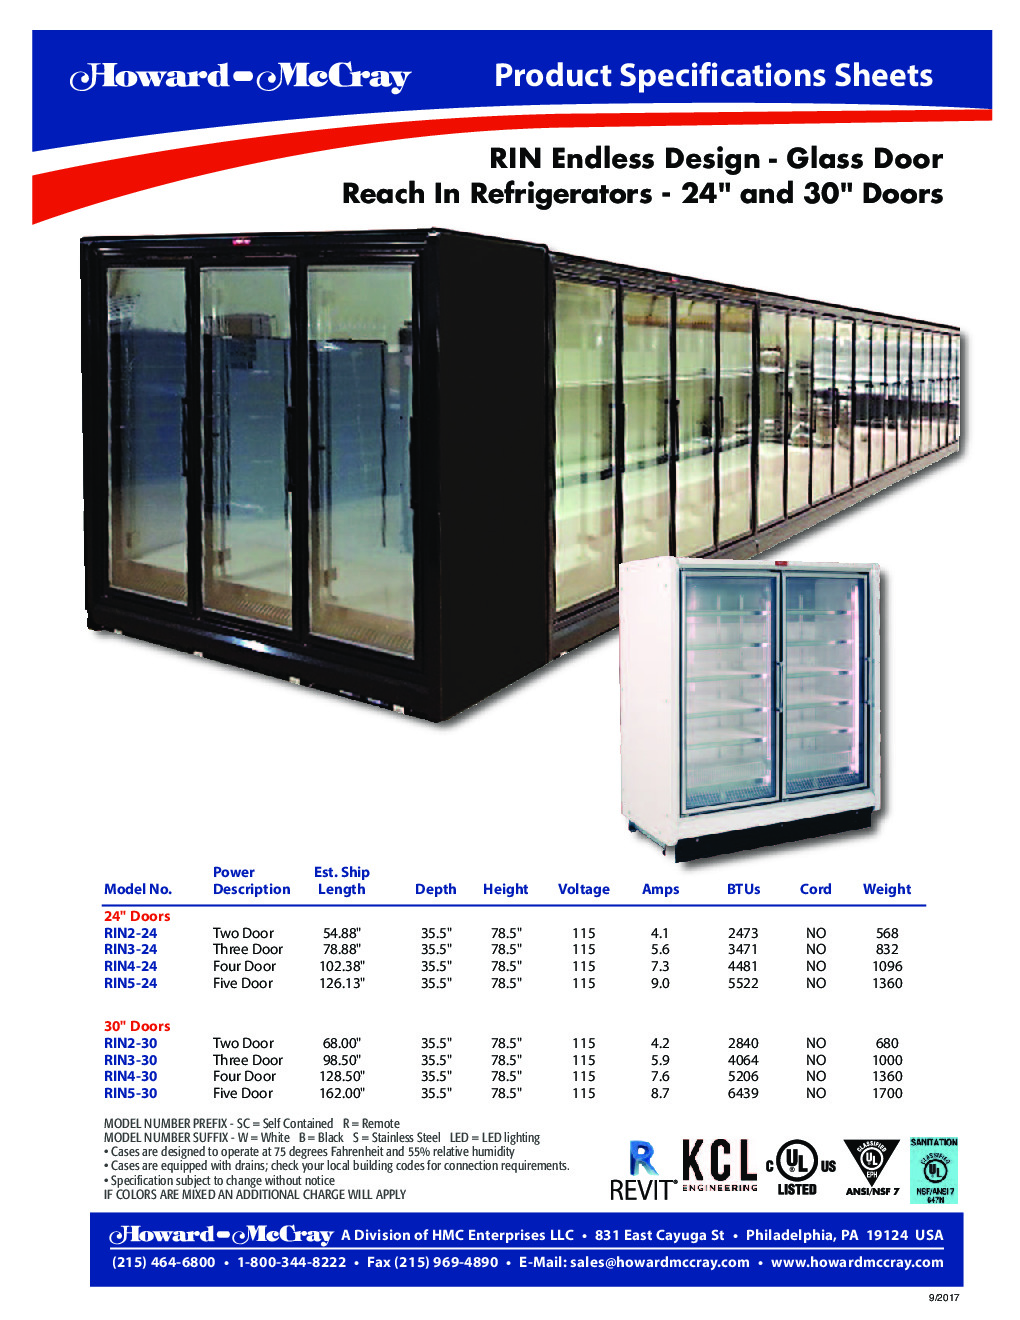 Howard-McCray RIN2-30-LED-S Merchandiser Refrigerator